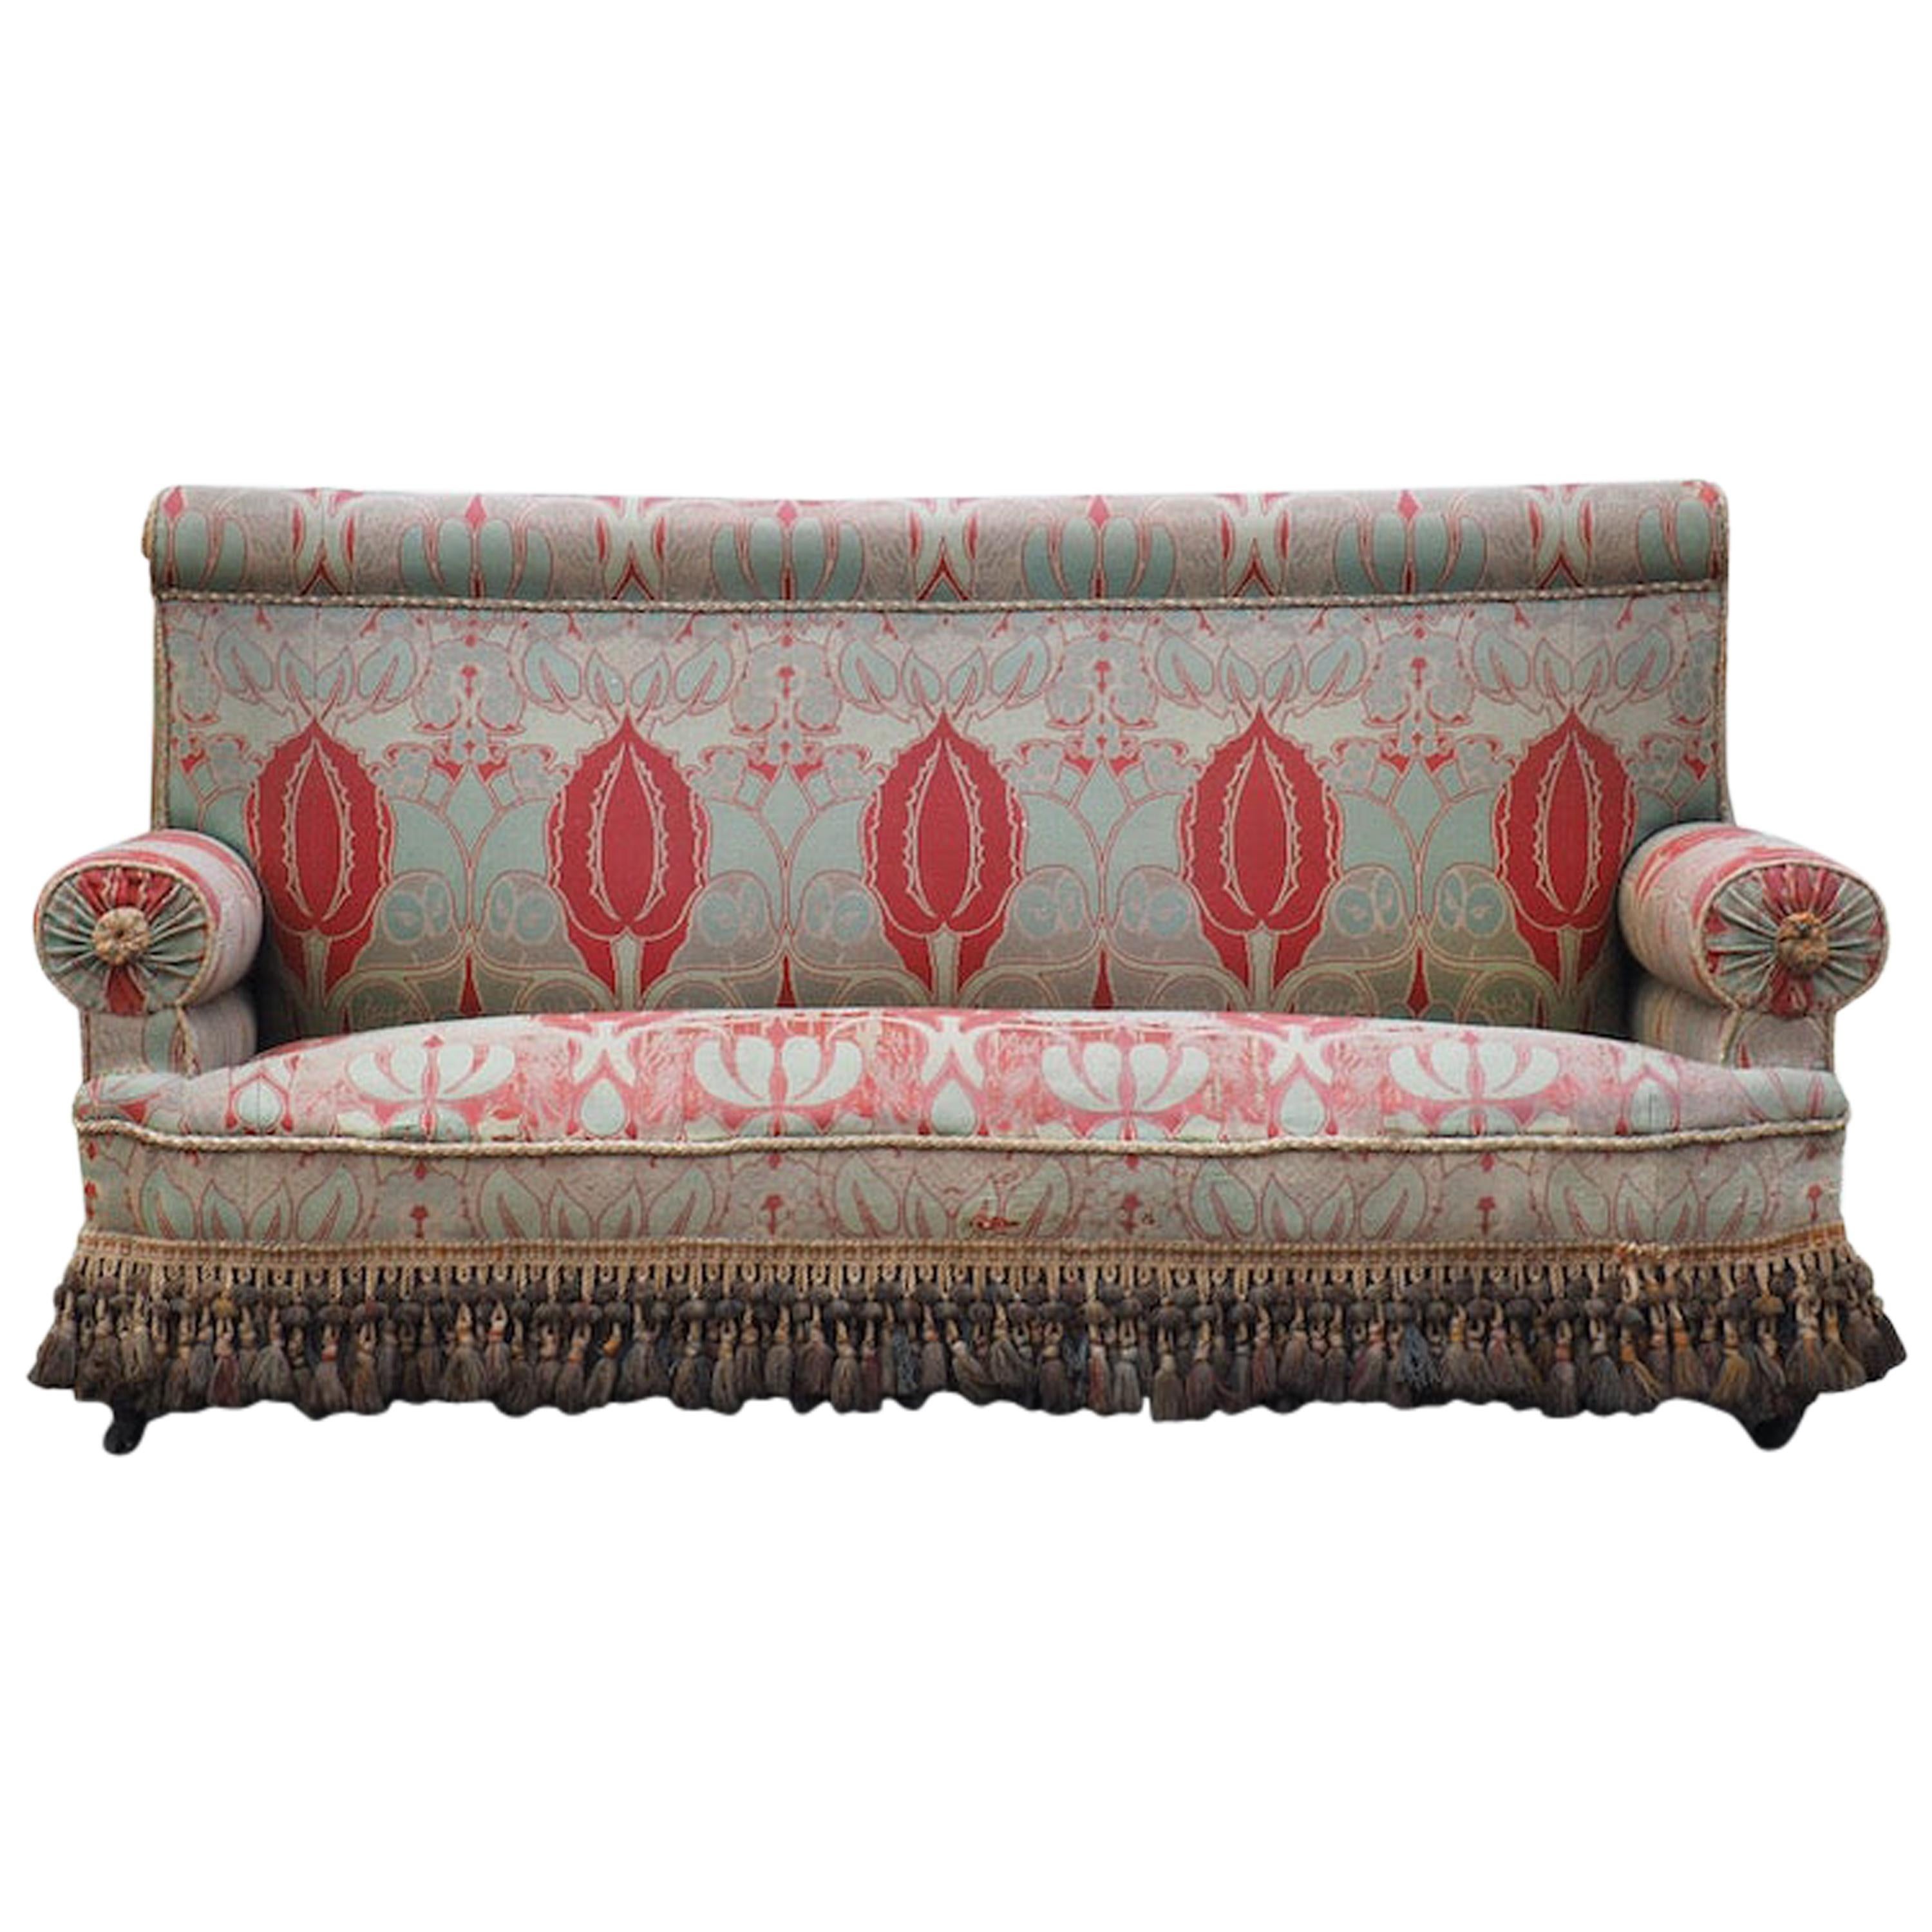 C.F.A. Voysey Arts & Crafts Upholstered Sofa, circa 1900